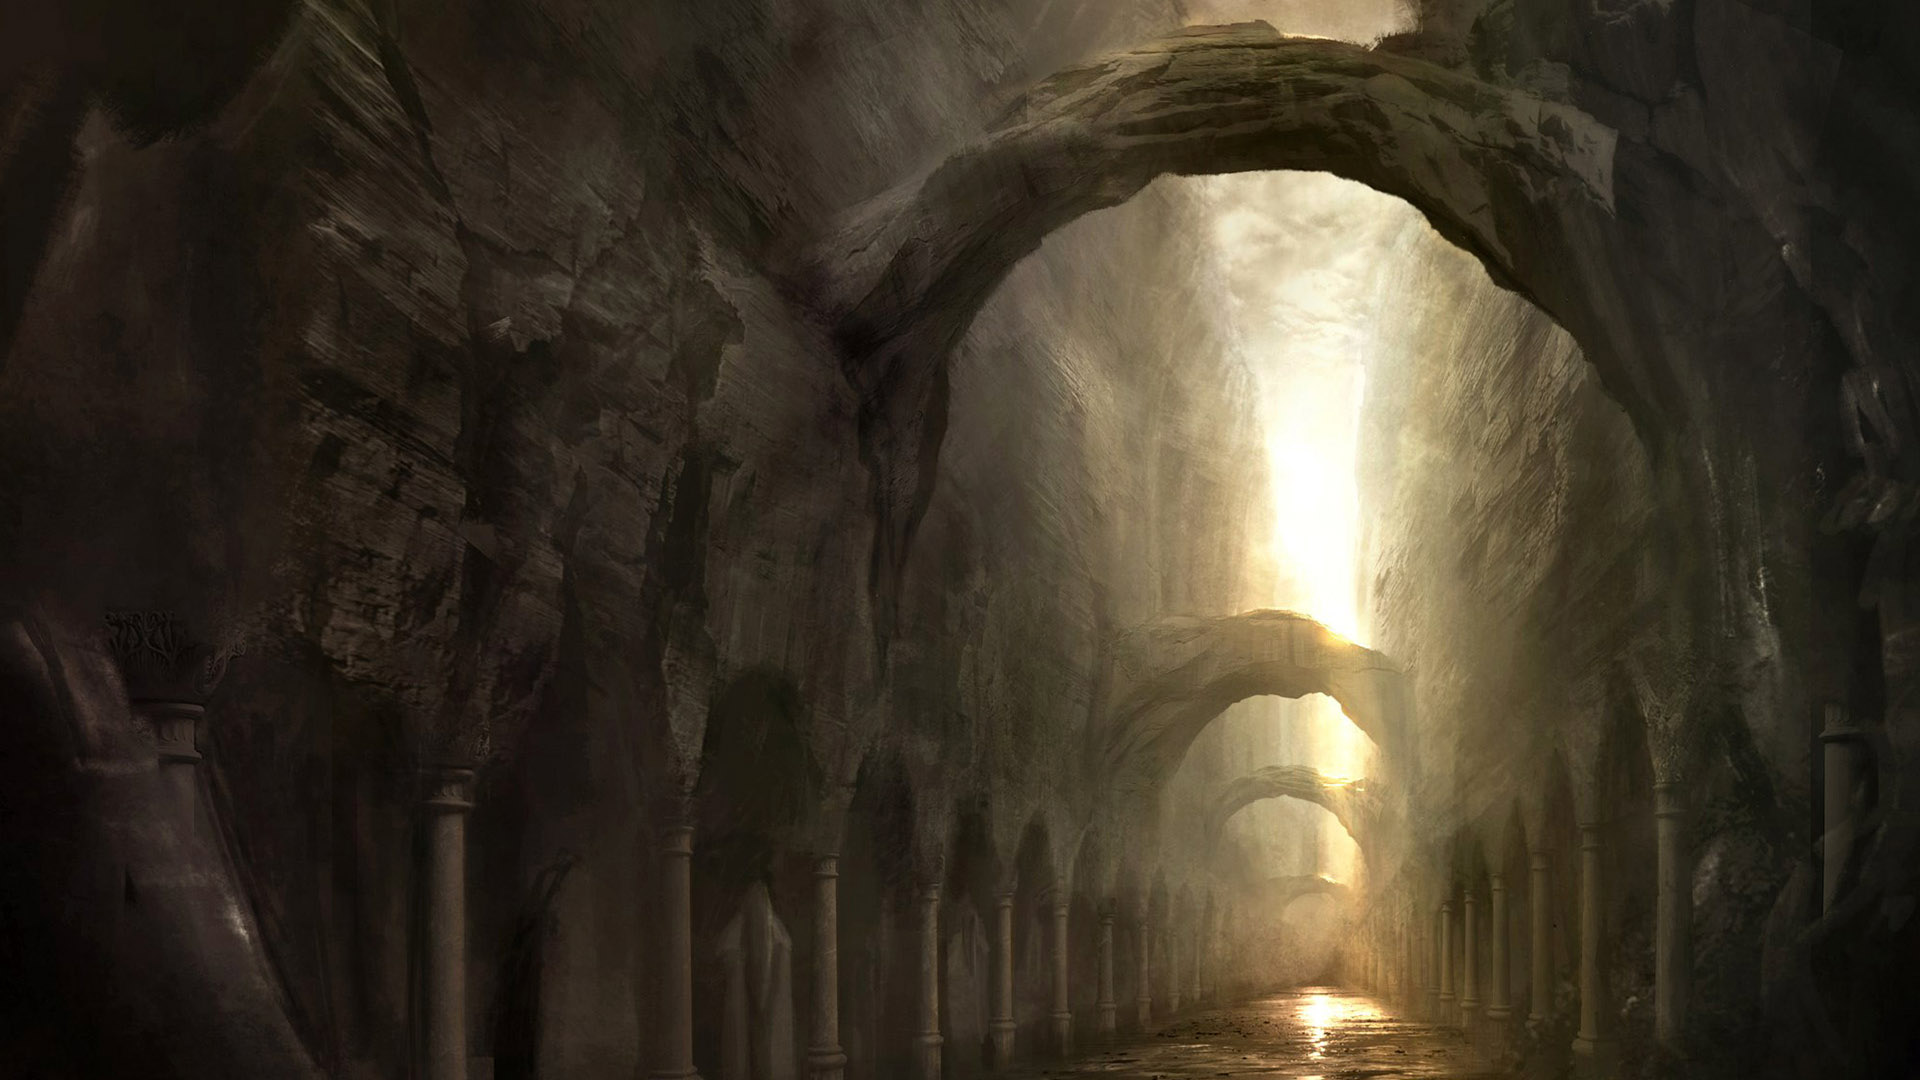 Misty cityscape with dark corridor